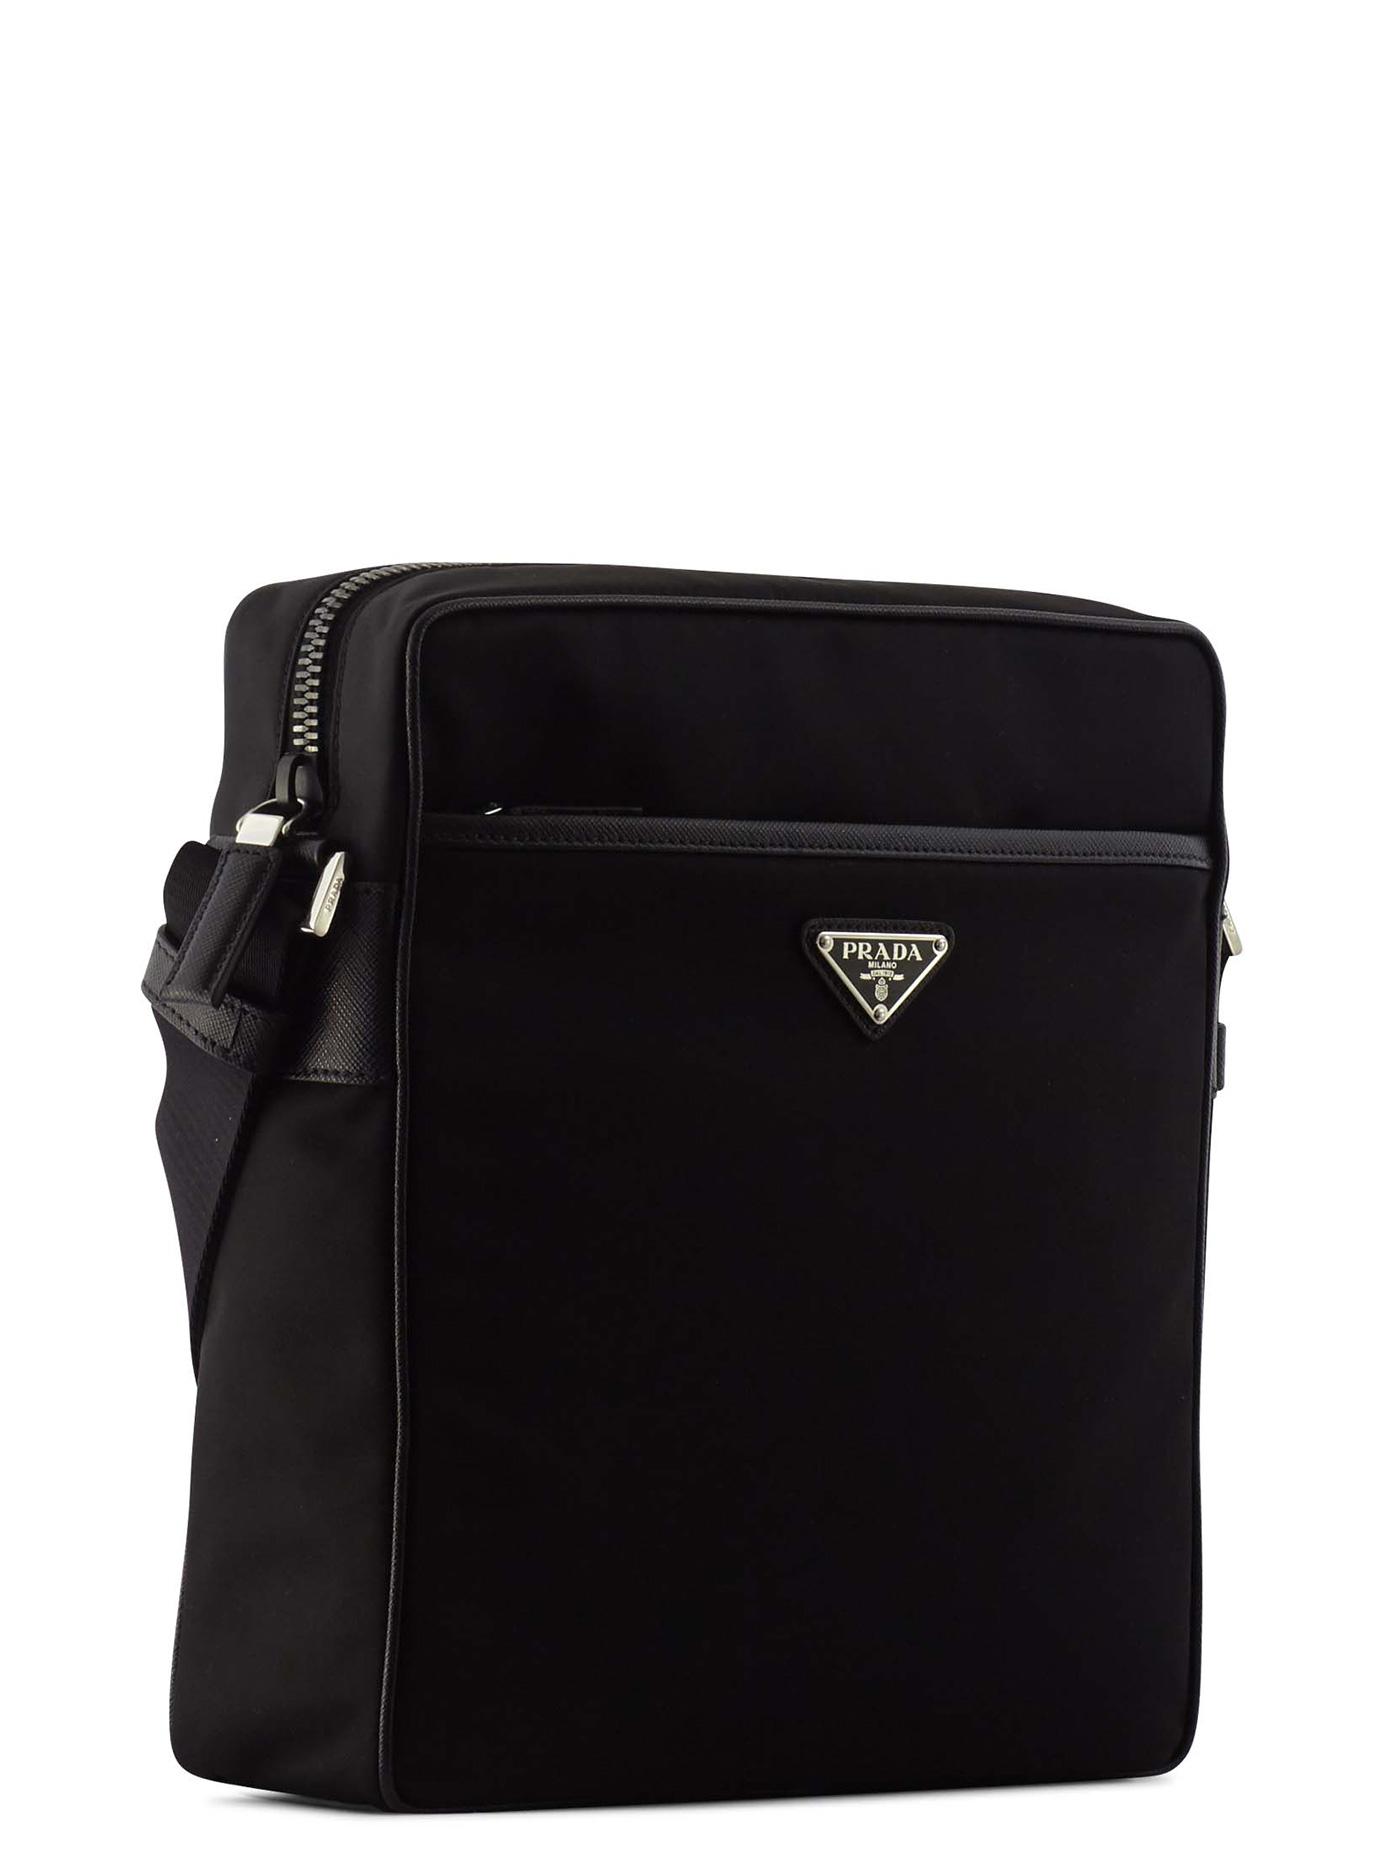 Lyst - Prada Nylon Crossbody Bag in Black for Men